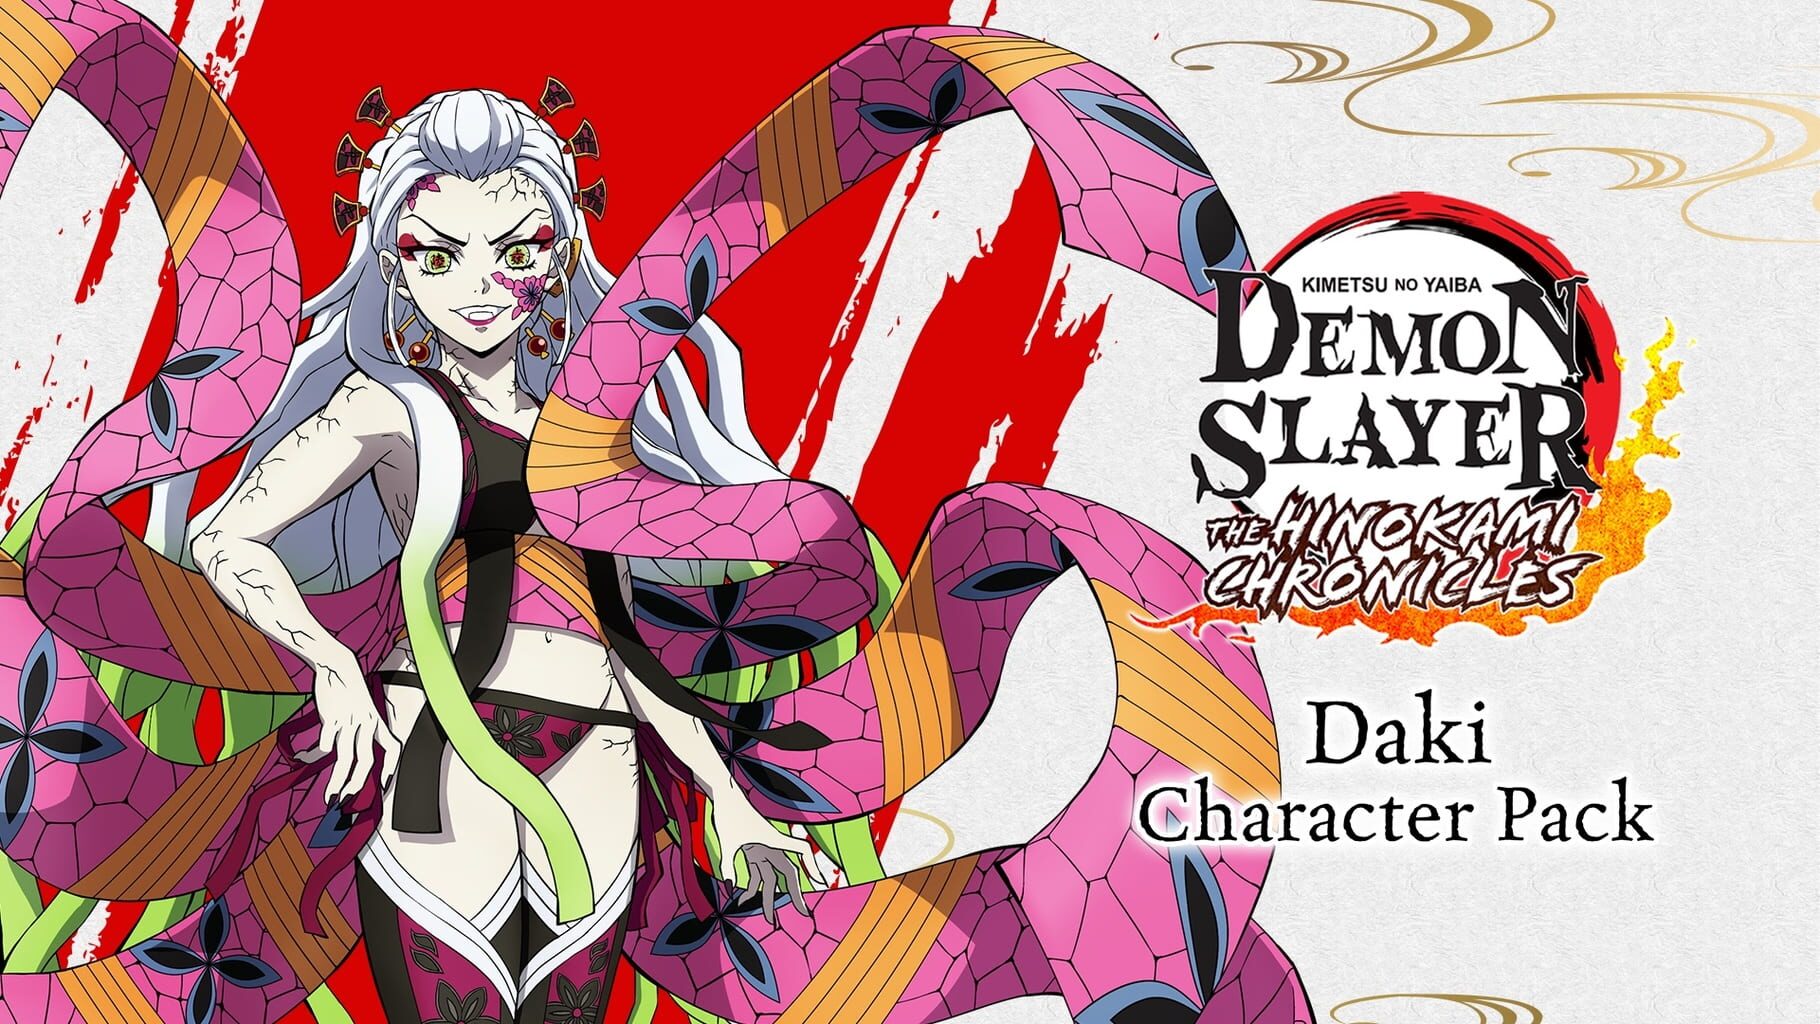 Demon Slayer: Kimetsu no Yaiba - The Hinokami Chronicles: Daki Character Pack artwork